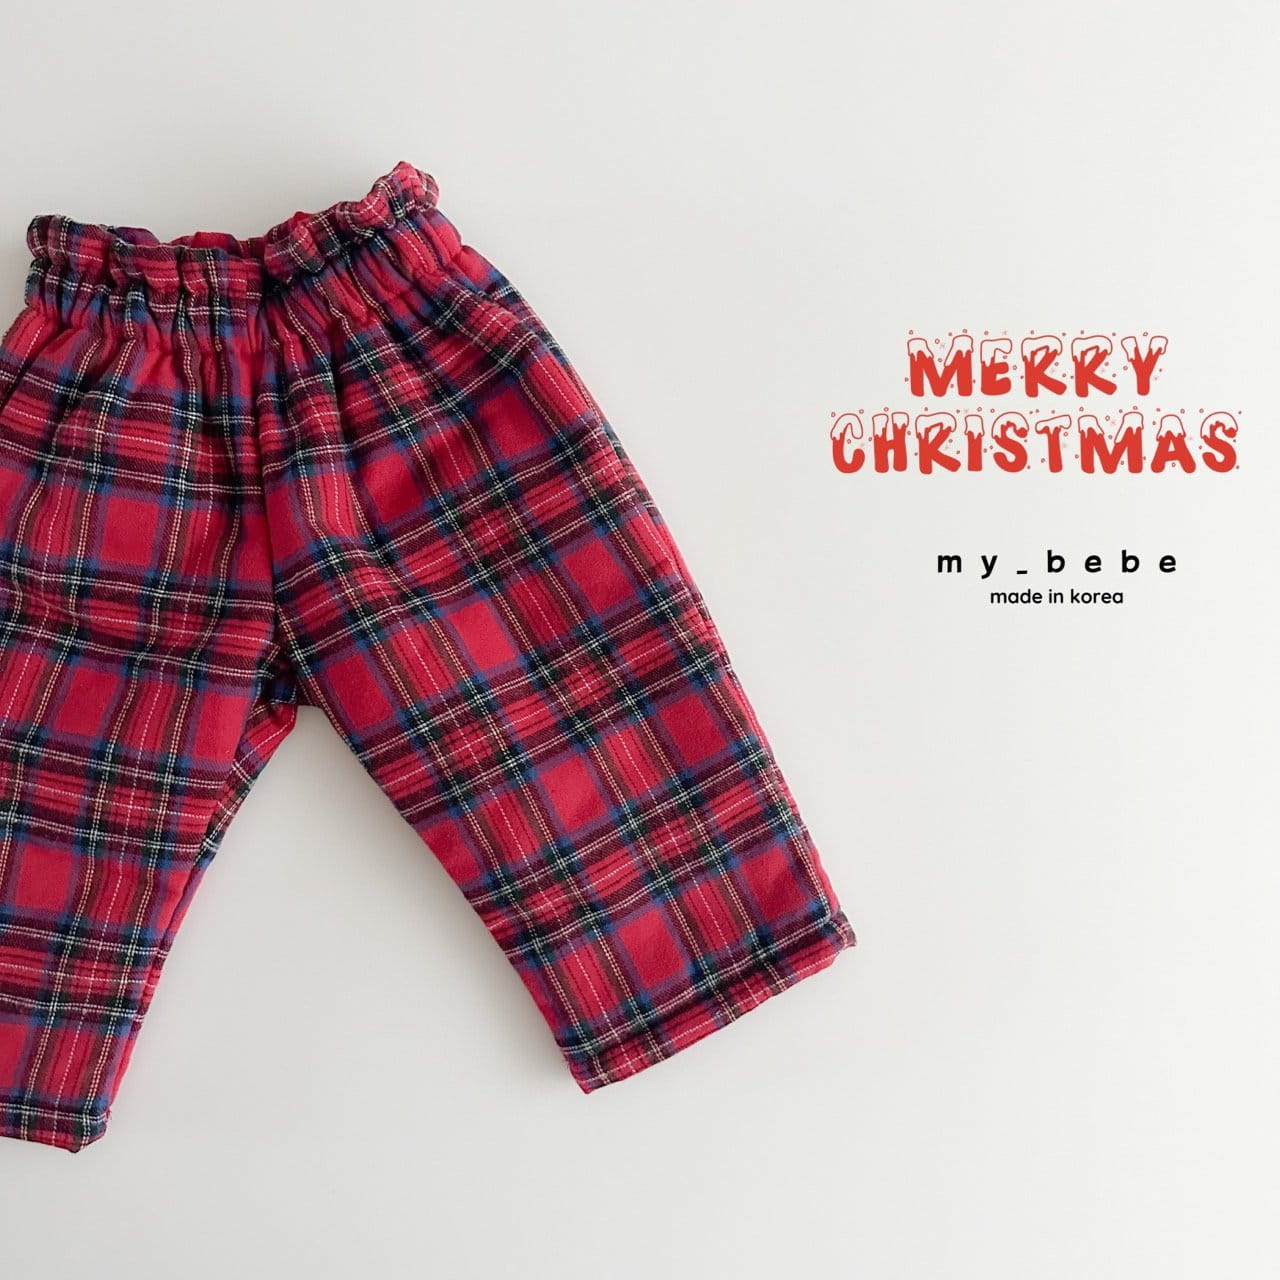 My Bebe - Korean Baby Fashion - #babyfashion - The End Of Year Pants